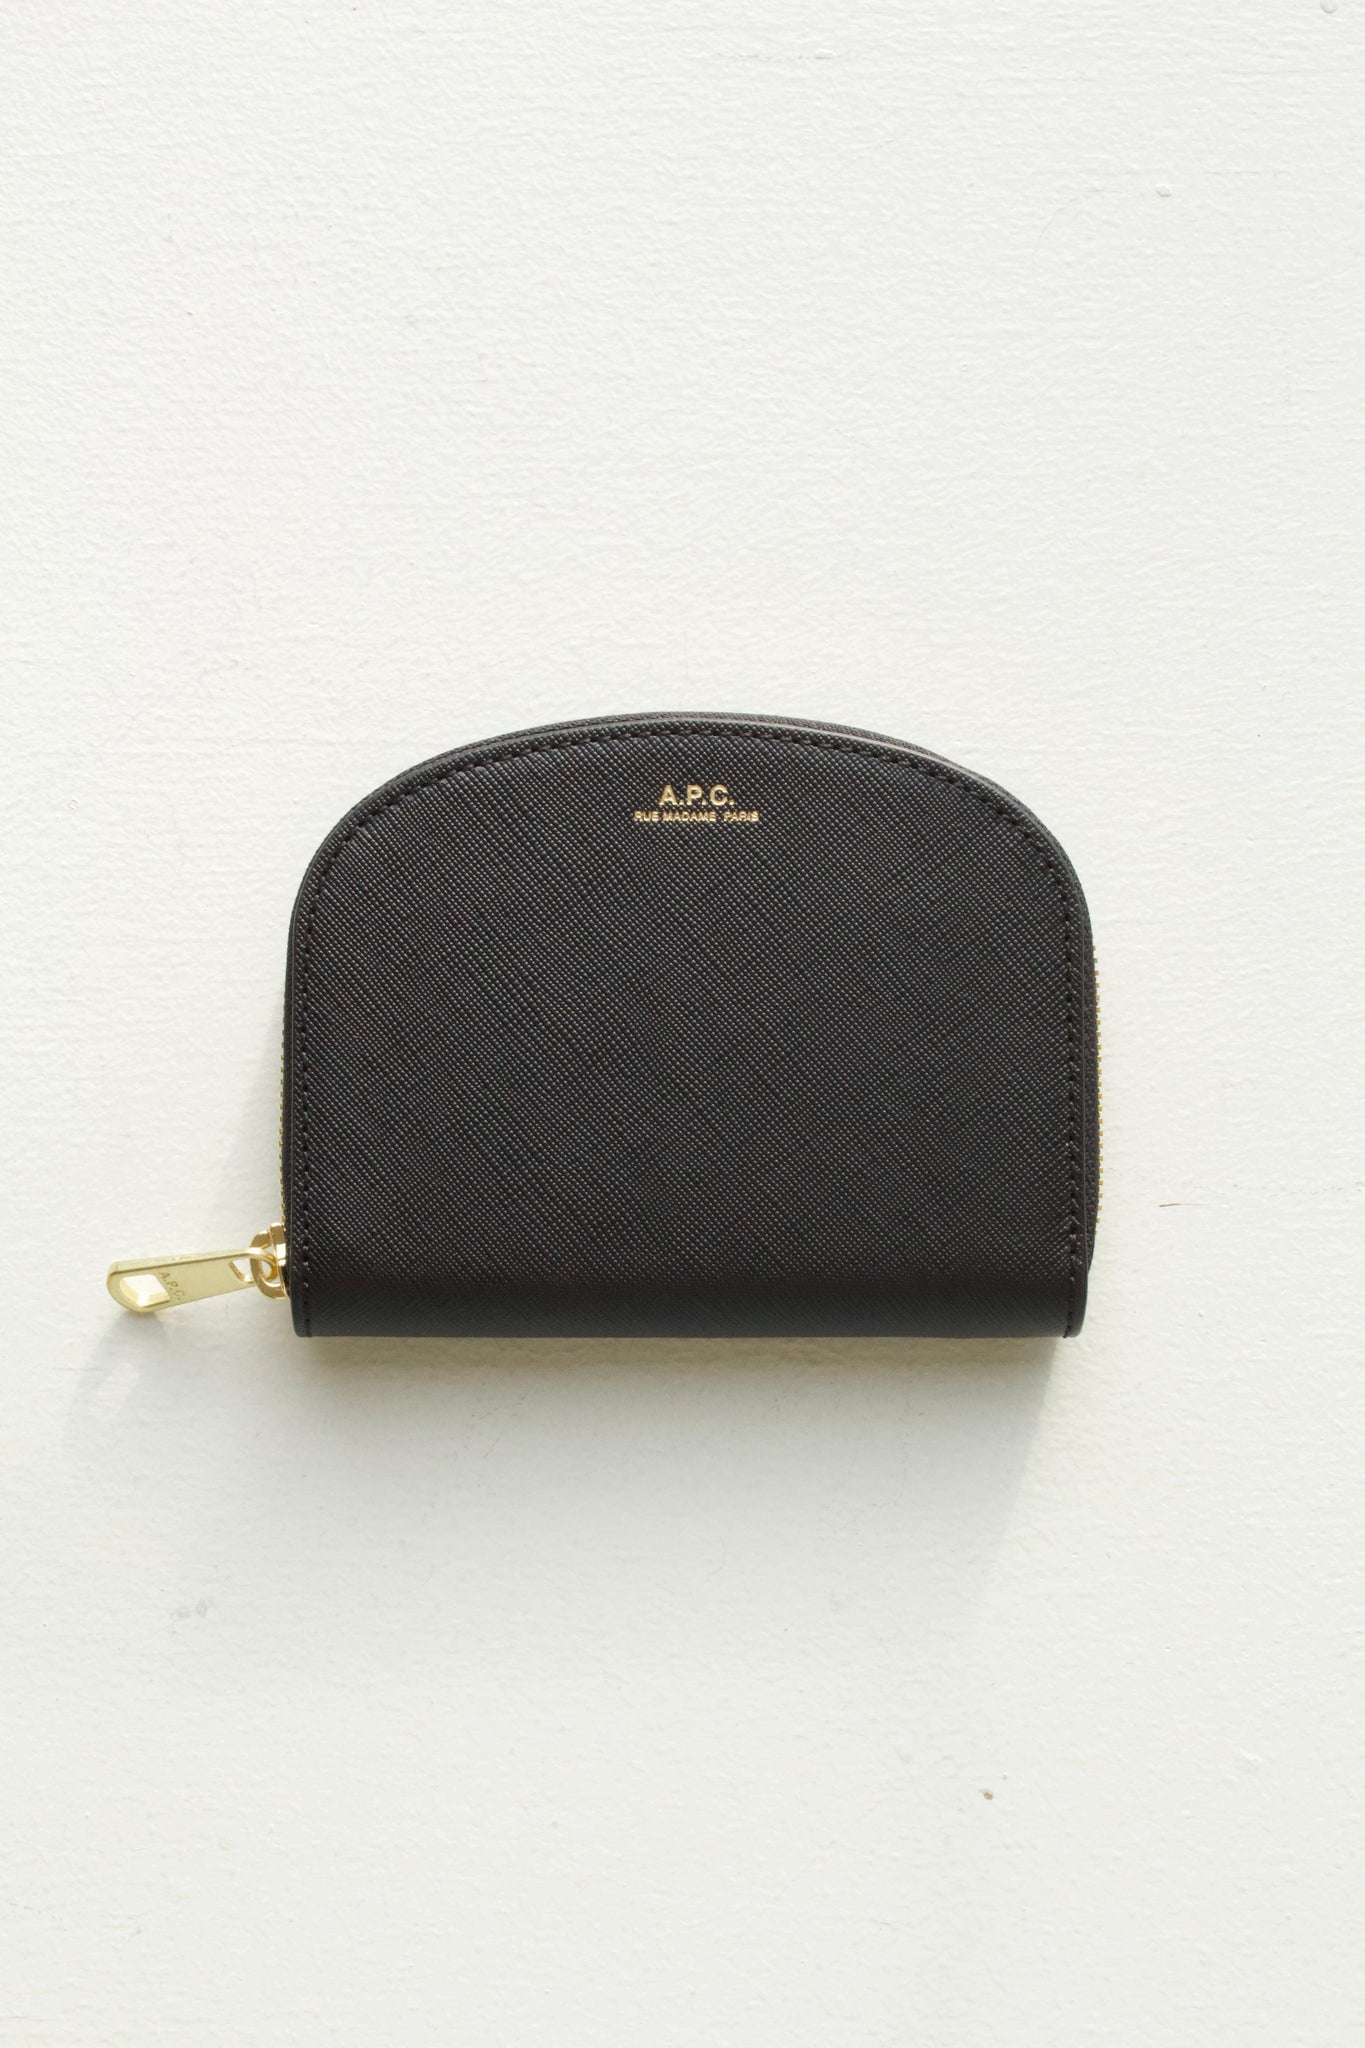 A.P.C Demi-Lune Mini Compact Wallet - Brown